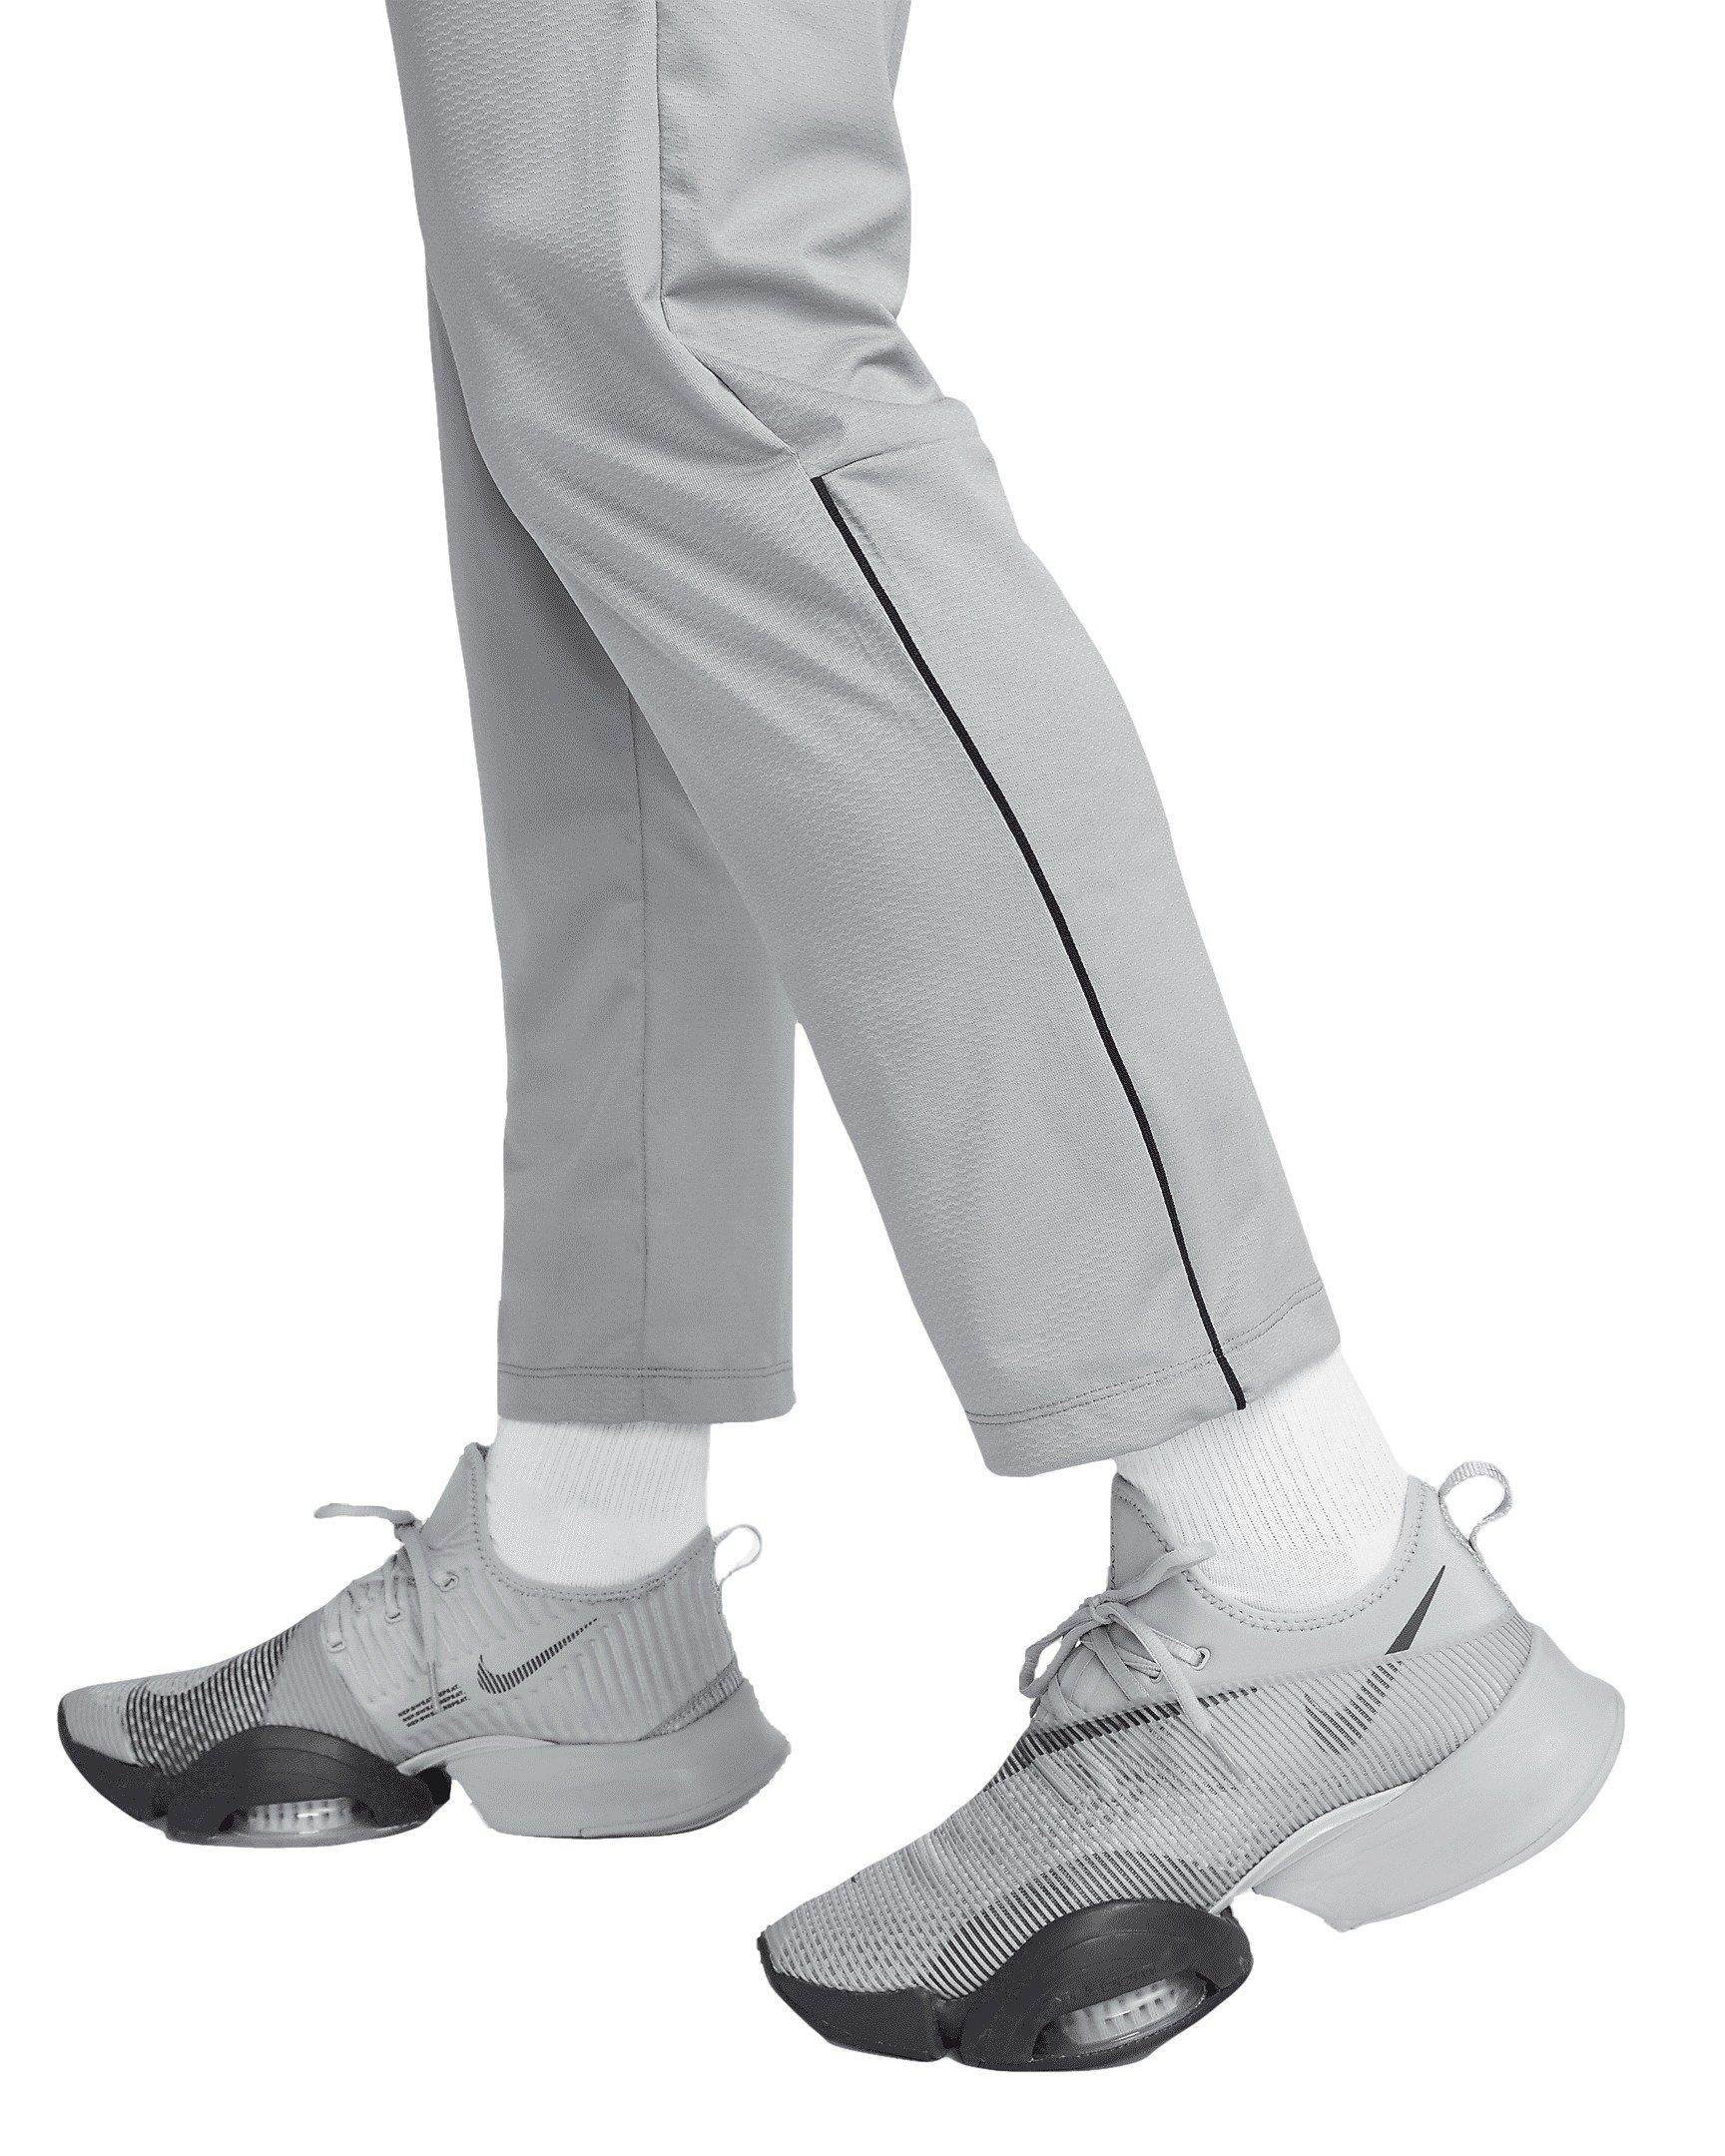 Nike Dri-FIT Knit Training Pants